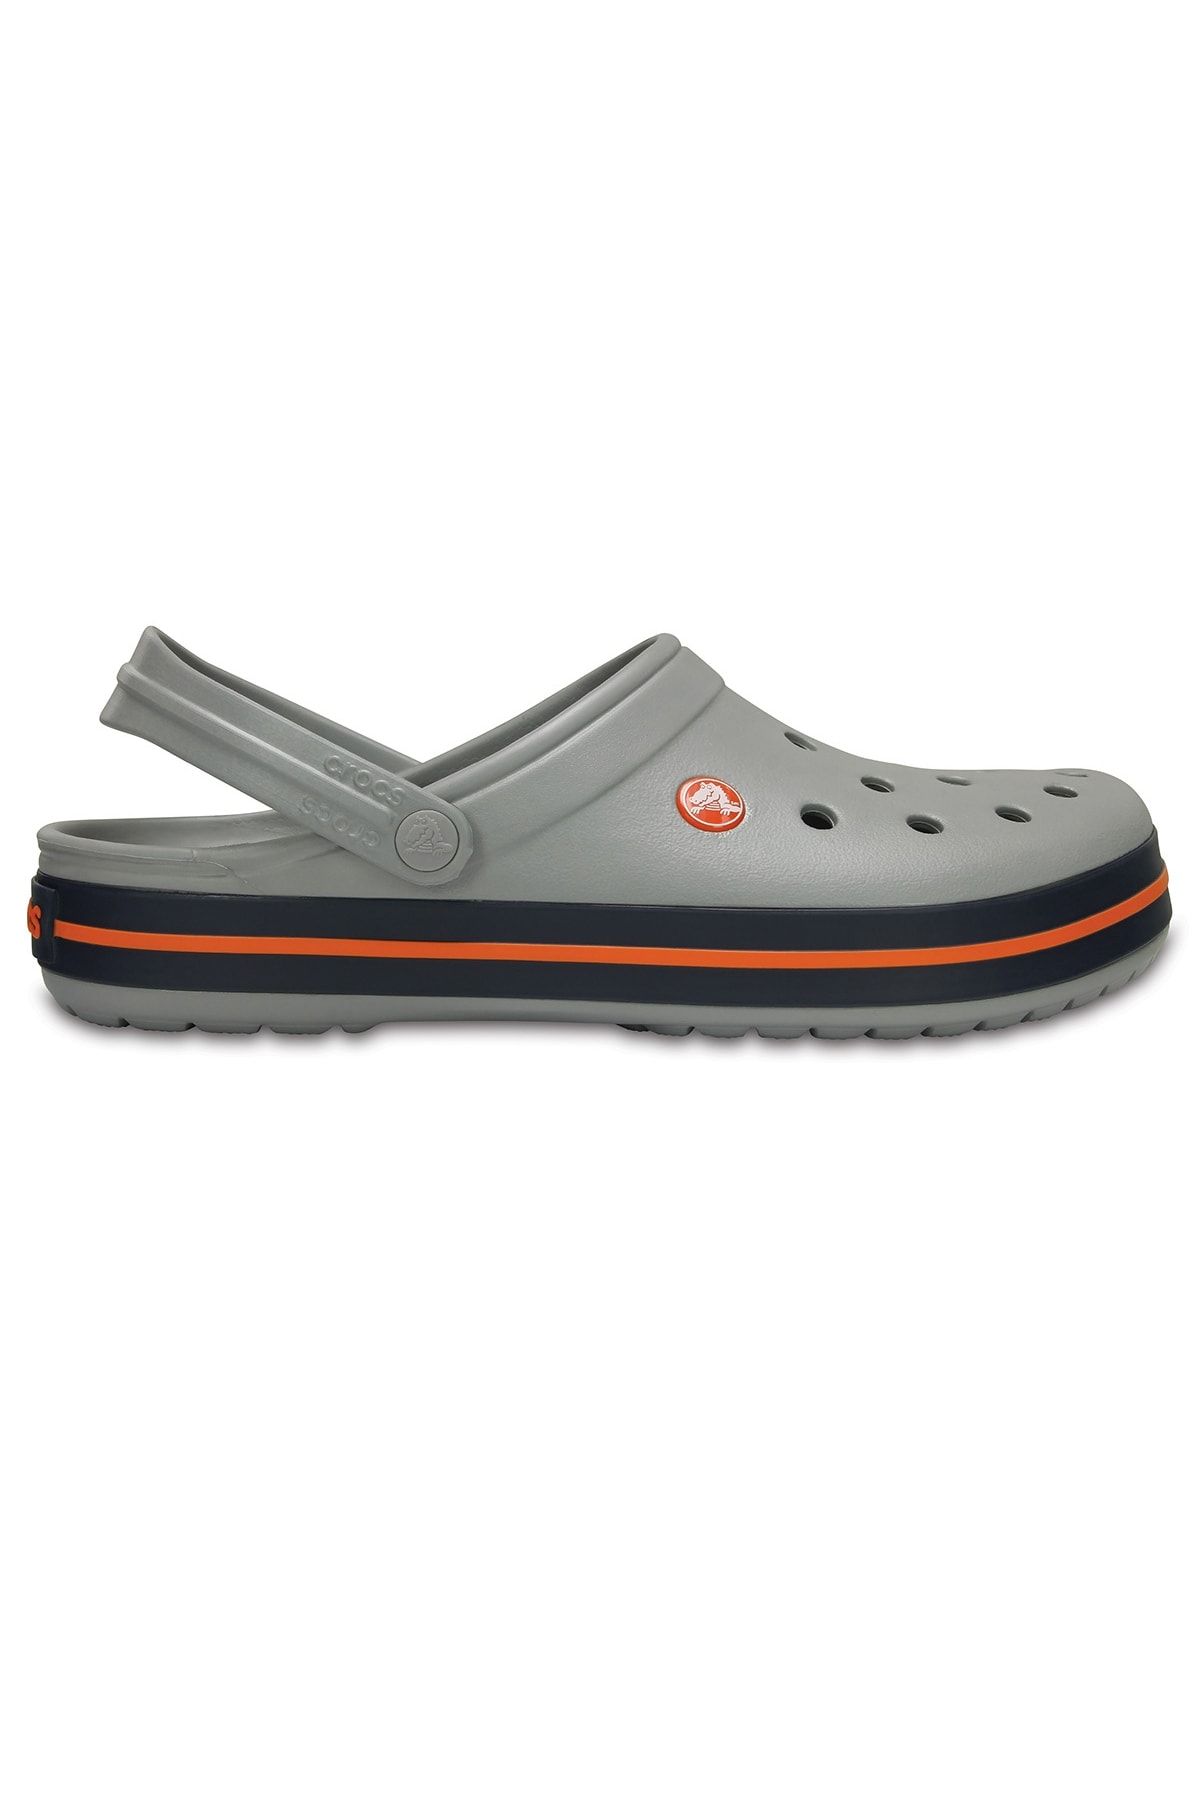 Crocs Crocband Terlik Sandalet Açık Gri / Lacivert